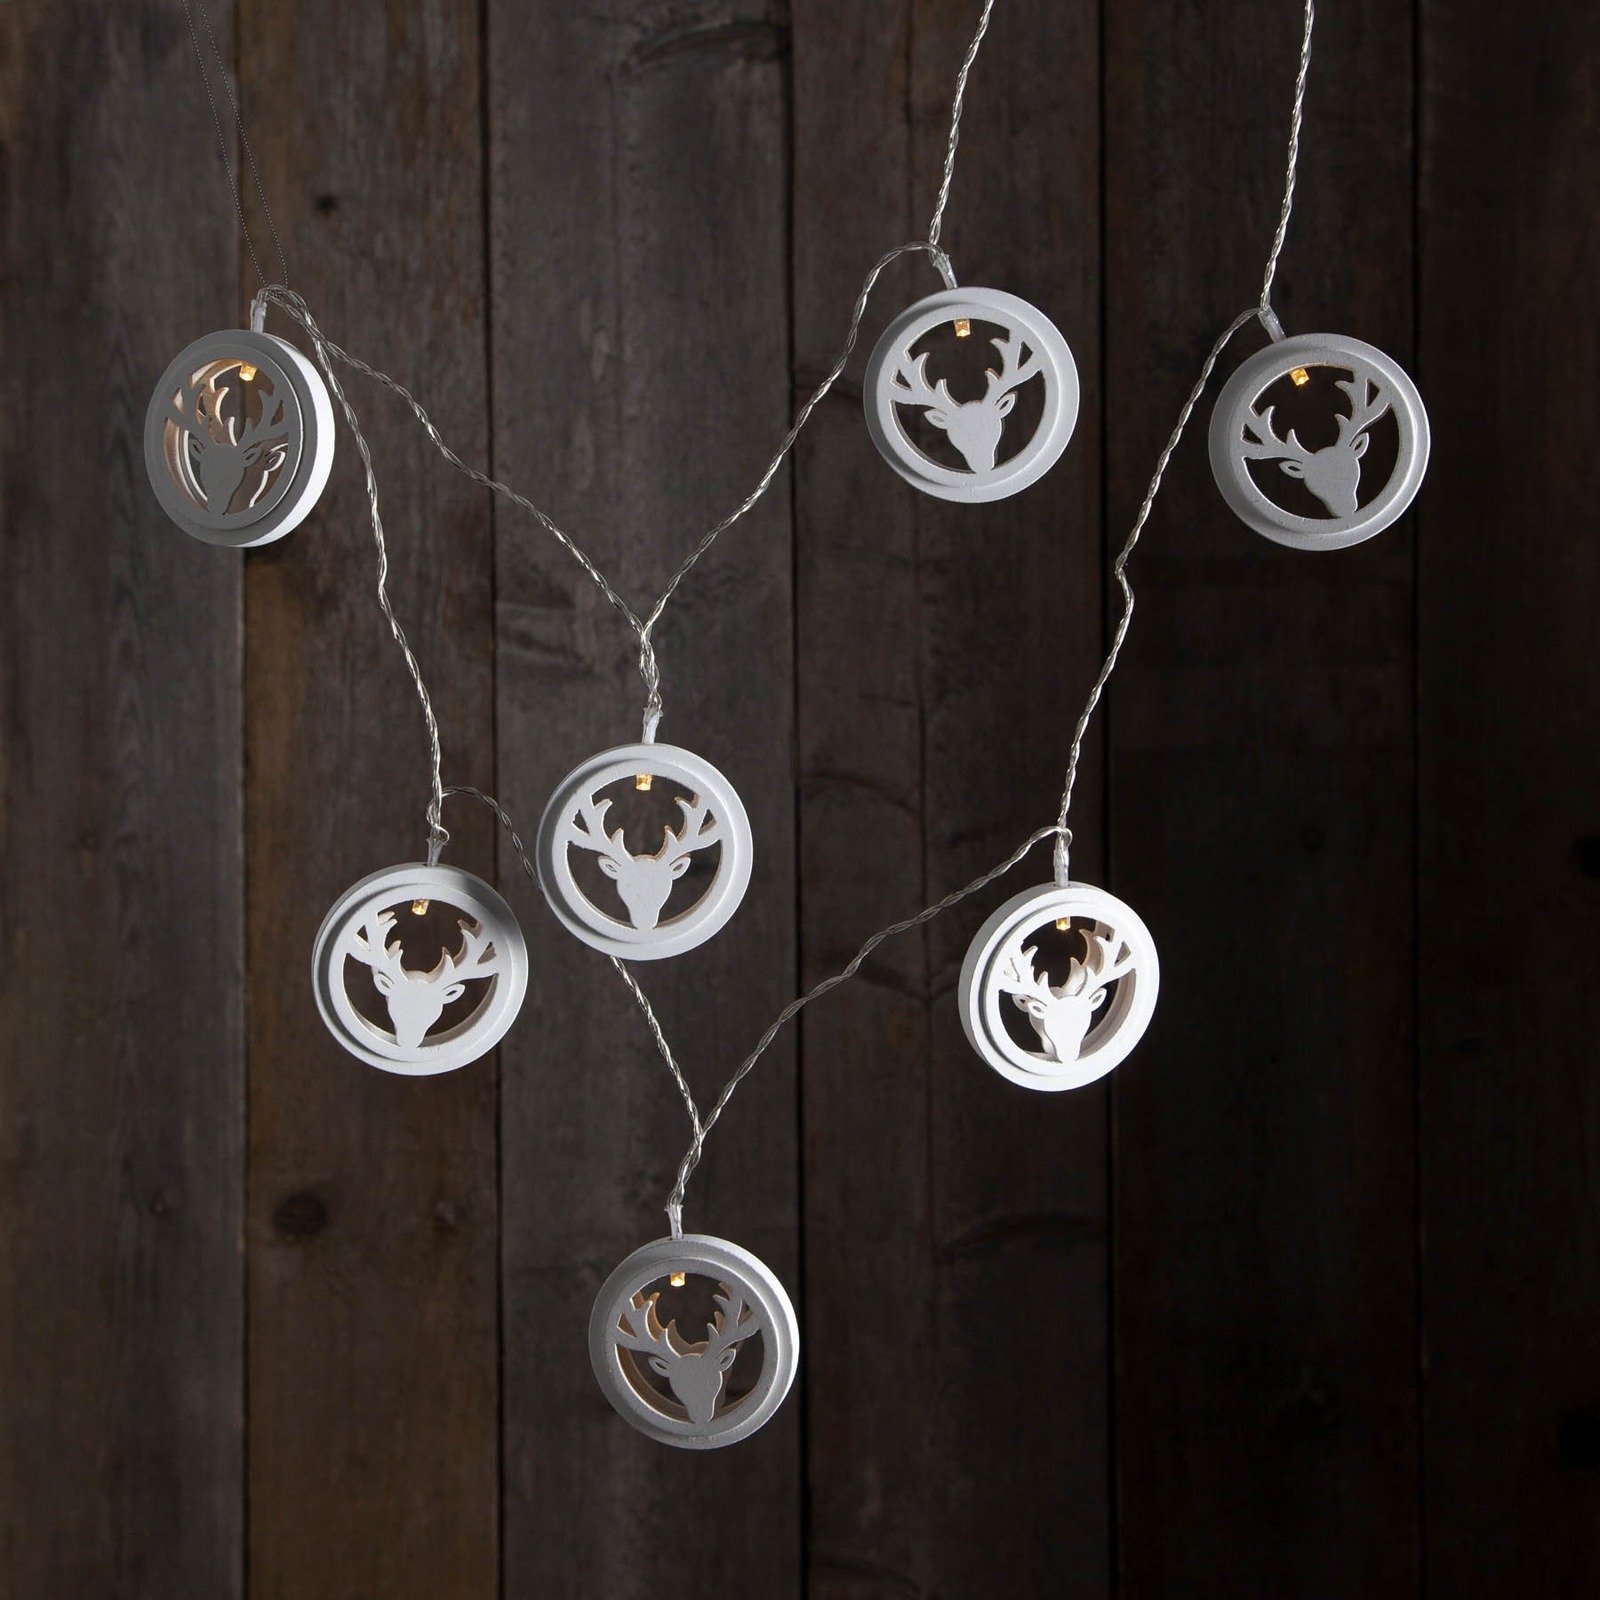 Woodworks LED string lights with 10 deer heads